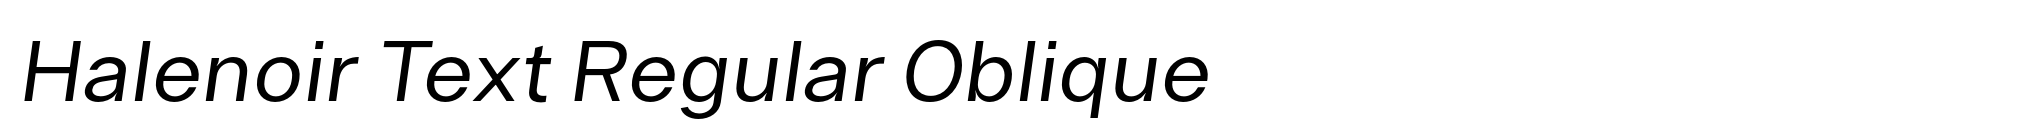 Halenoir Text Regular Oblique image